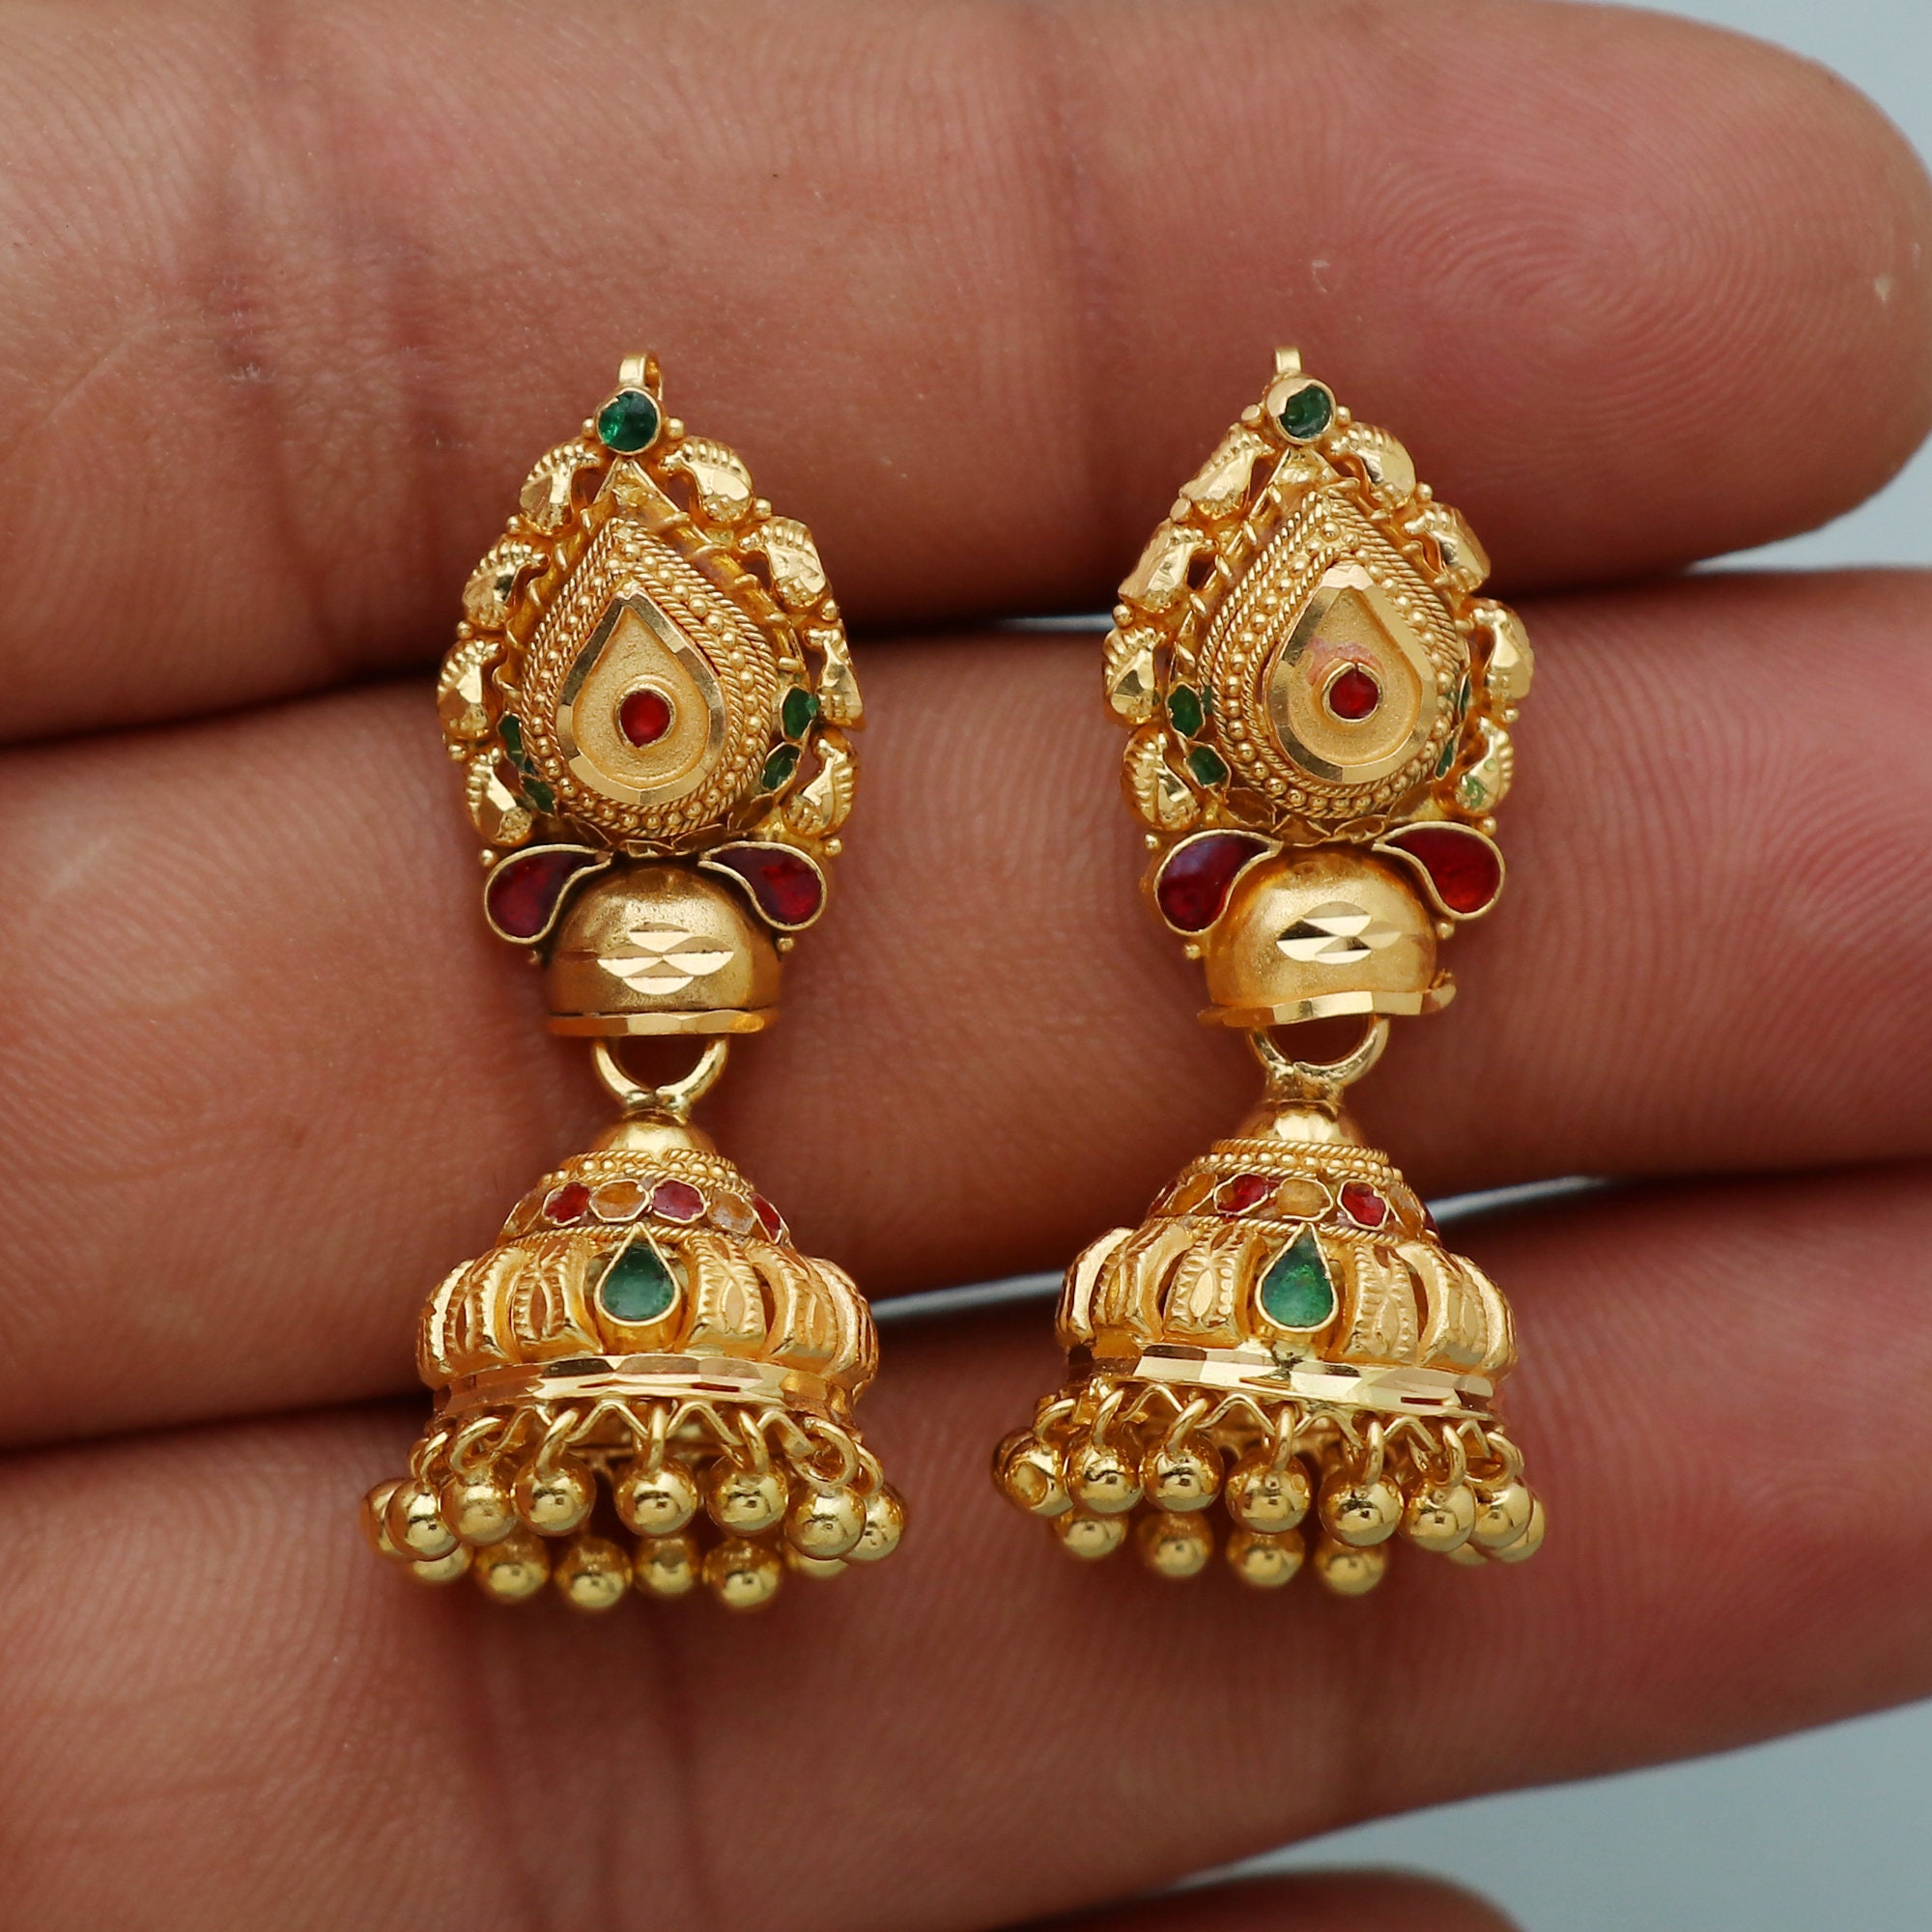 22K Gold 'Antique' Drop Earrings with Fancy Stones - 235-GER11056 in 11.250  Grams